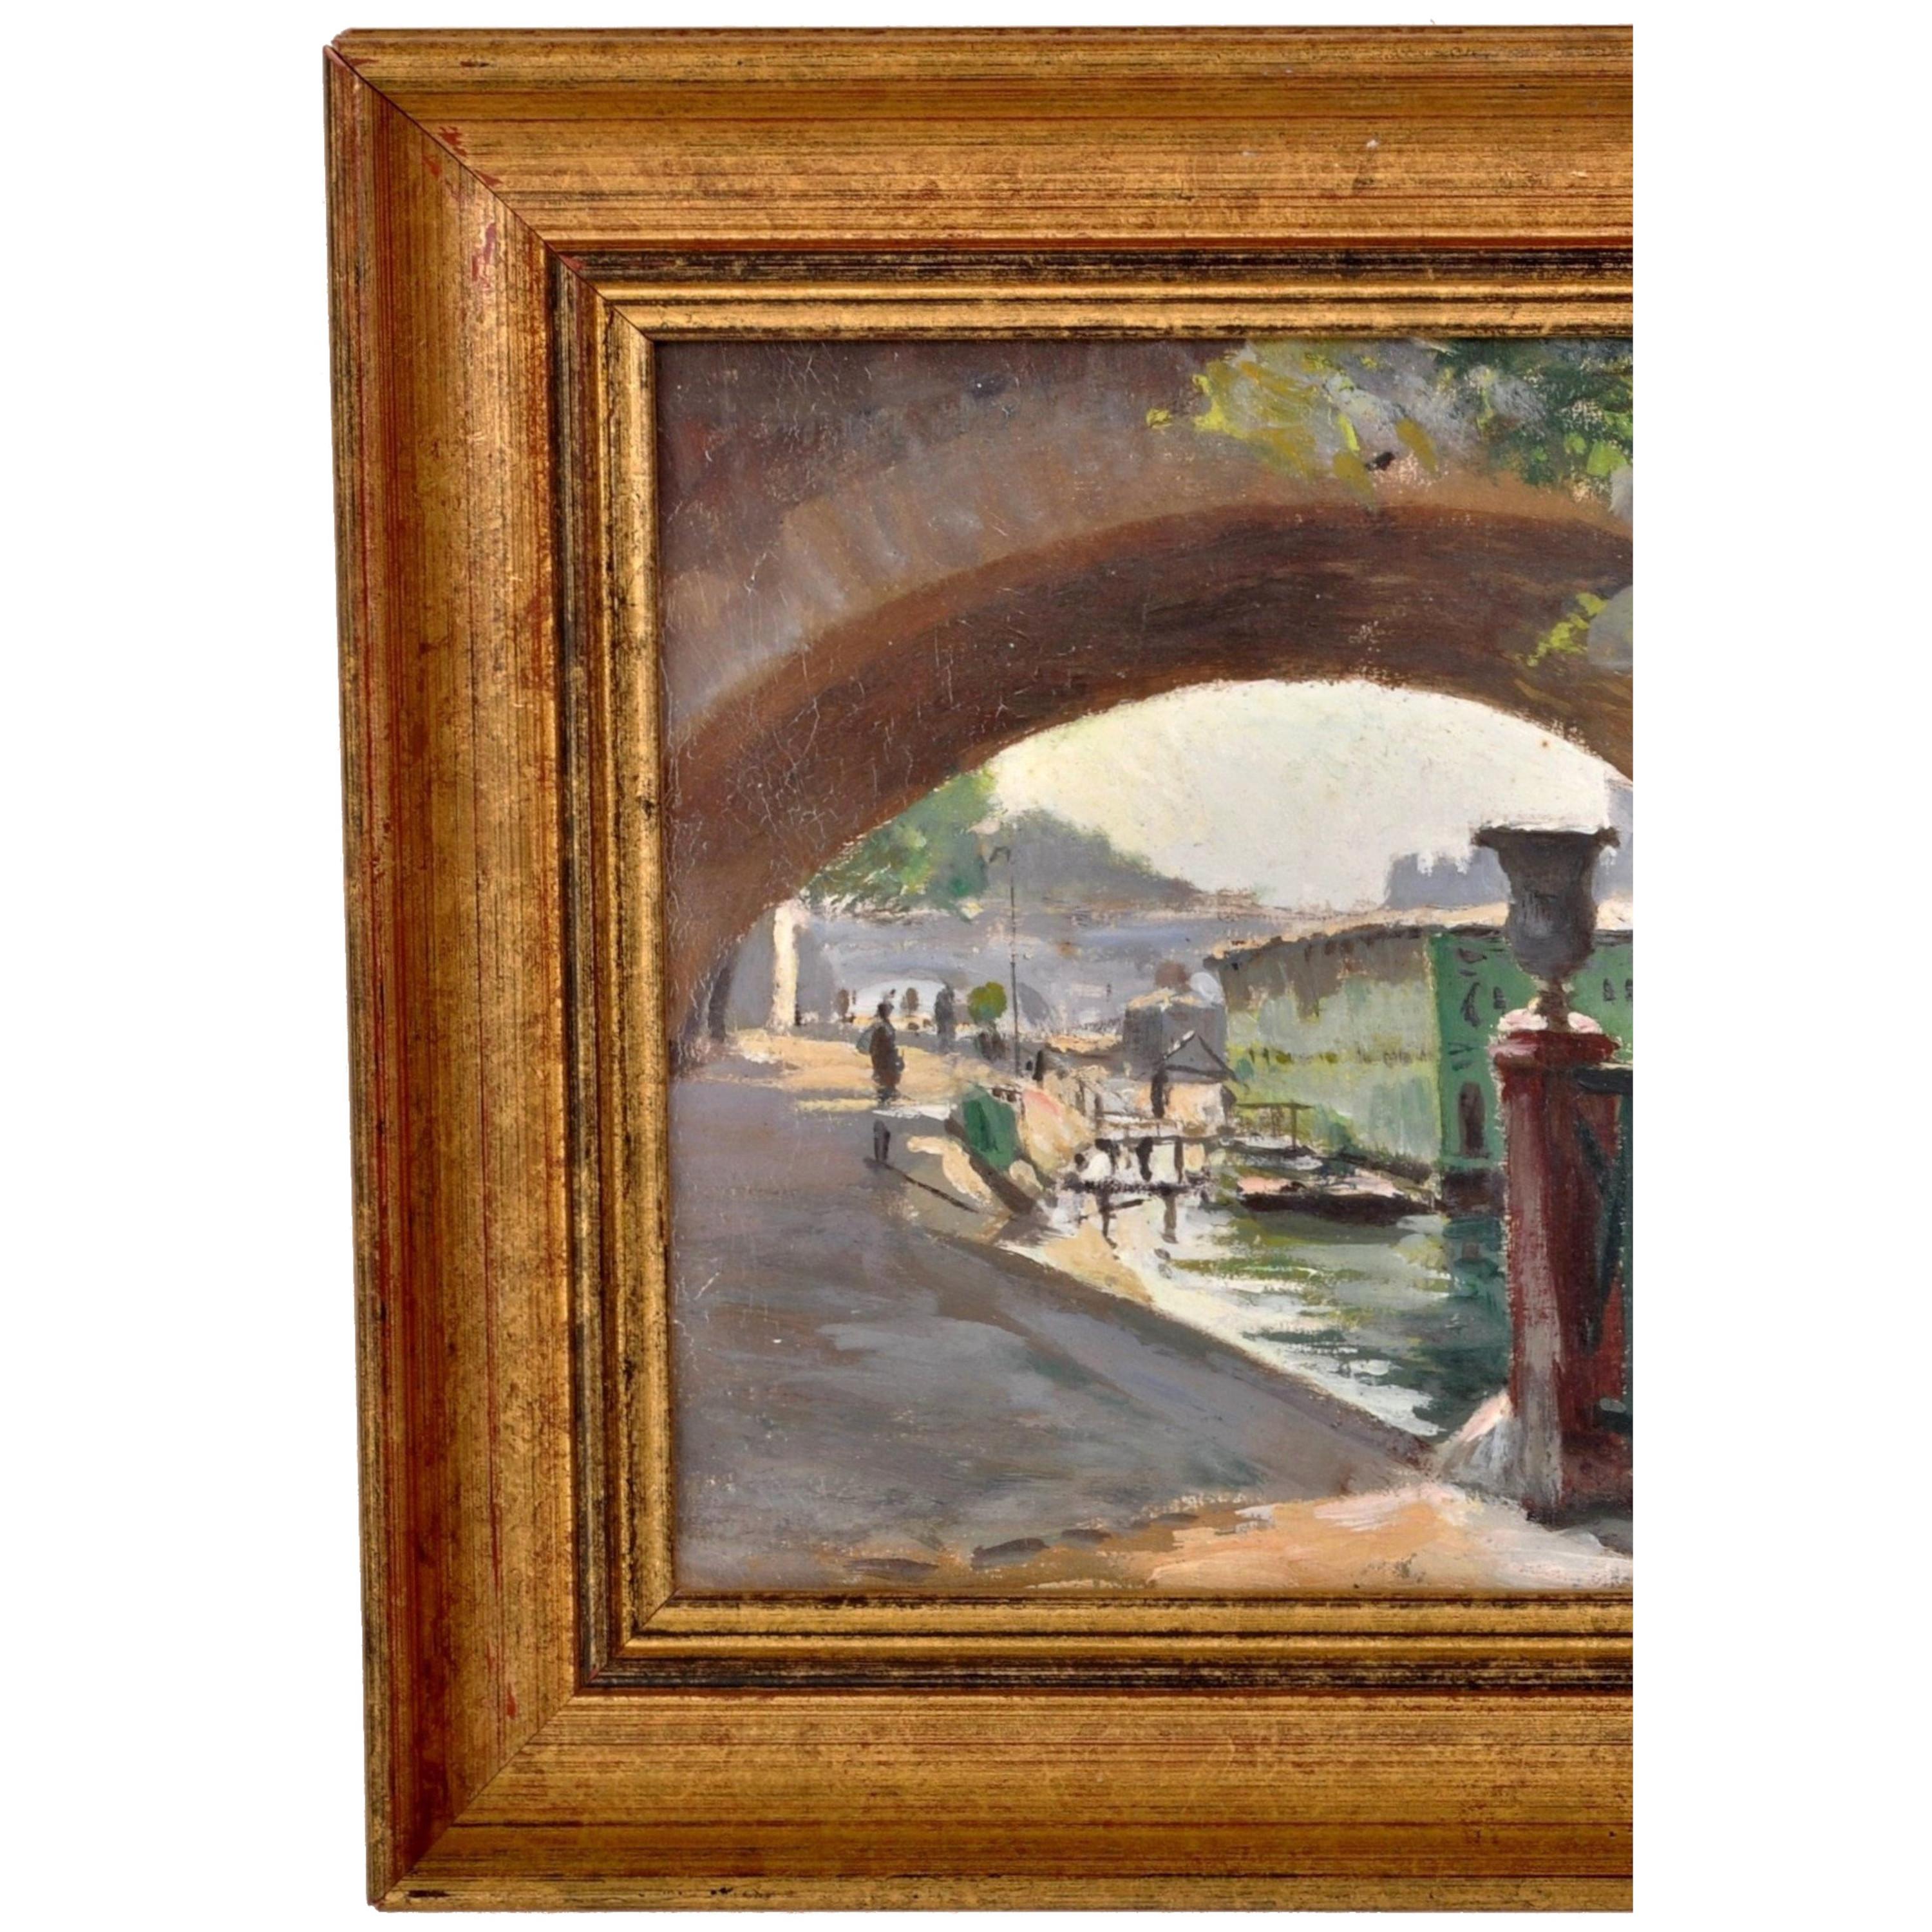 Antikes französisches impressionistisches Ölgemälde, Pariser Flusssszene, Paul de Frick 1900 (Braun), Landscape Painting, von PAUL DE FRICK